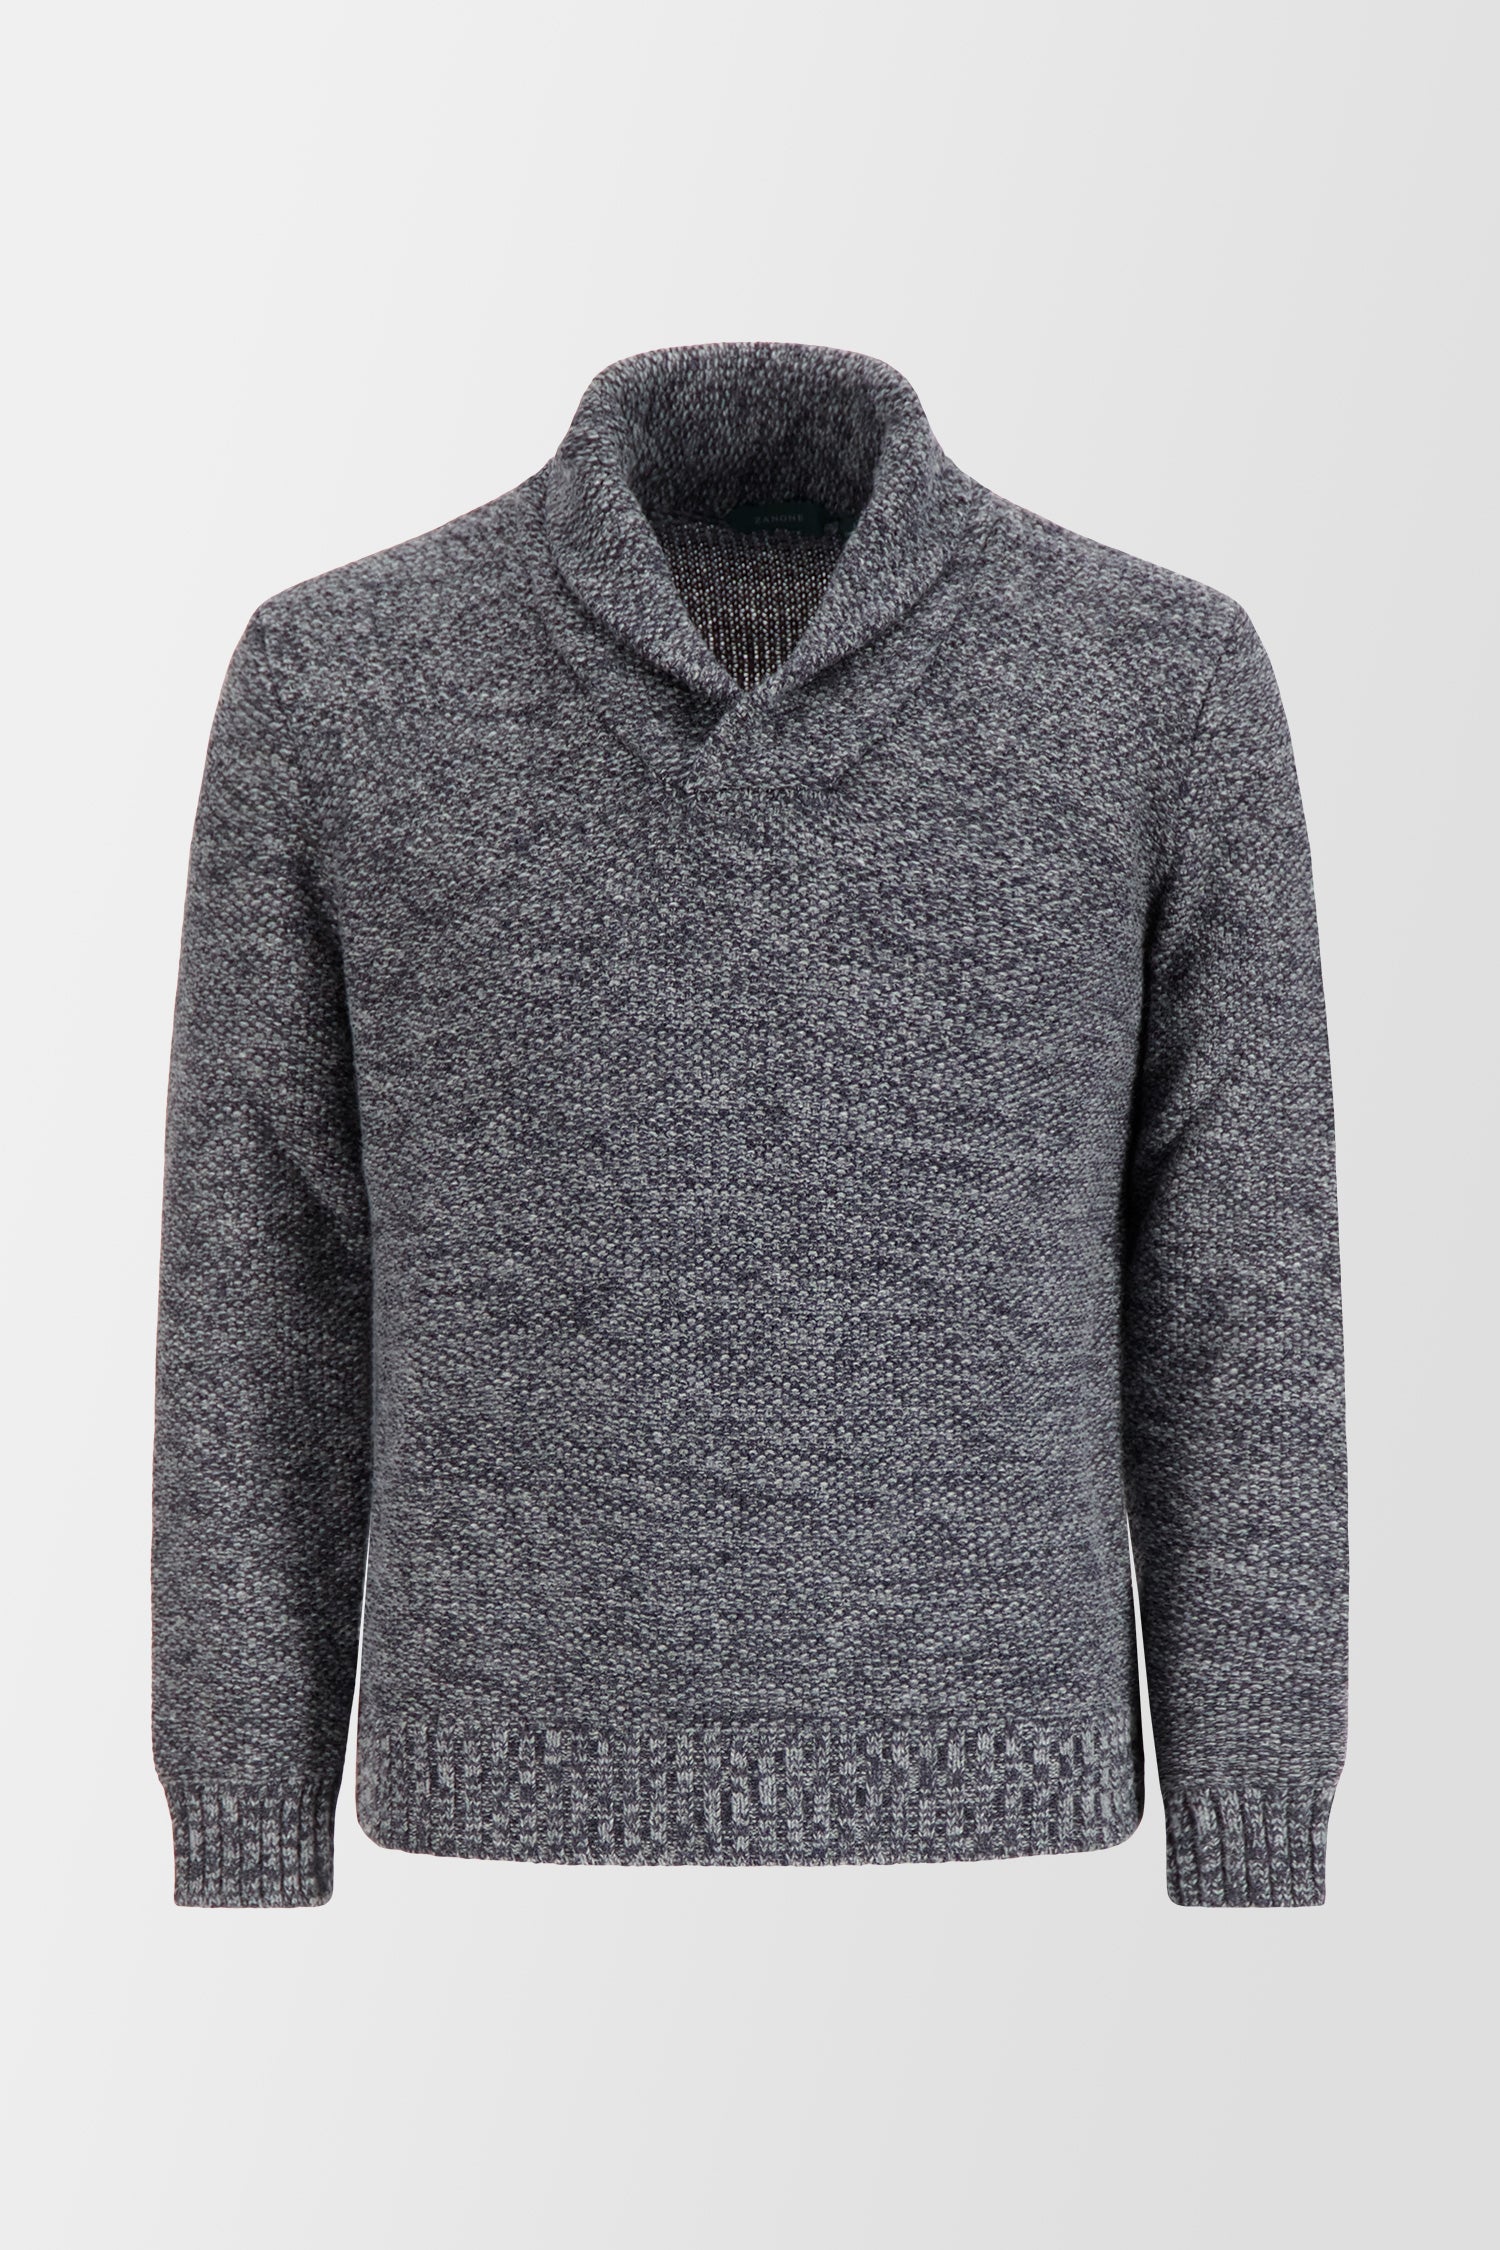 Zanone Grey Pescatore Surmounted V Neck Sweater